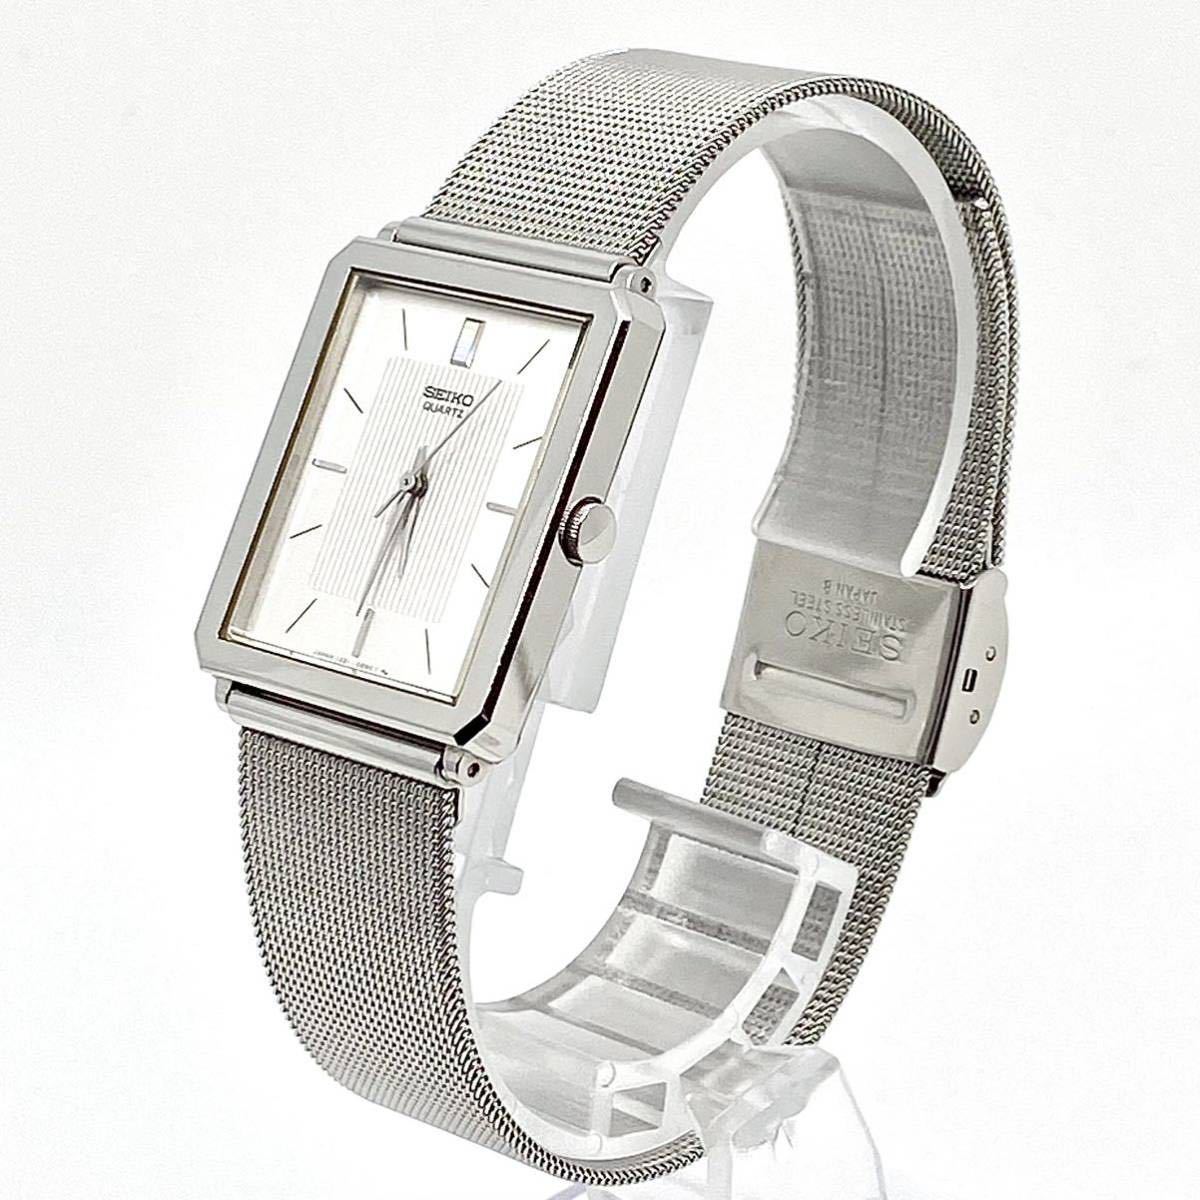 SEIKO 腕時計 バーインデックス スクエア 3針 クォーツ quartz シルバー 銀 セイコー Y479_画像2